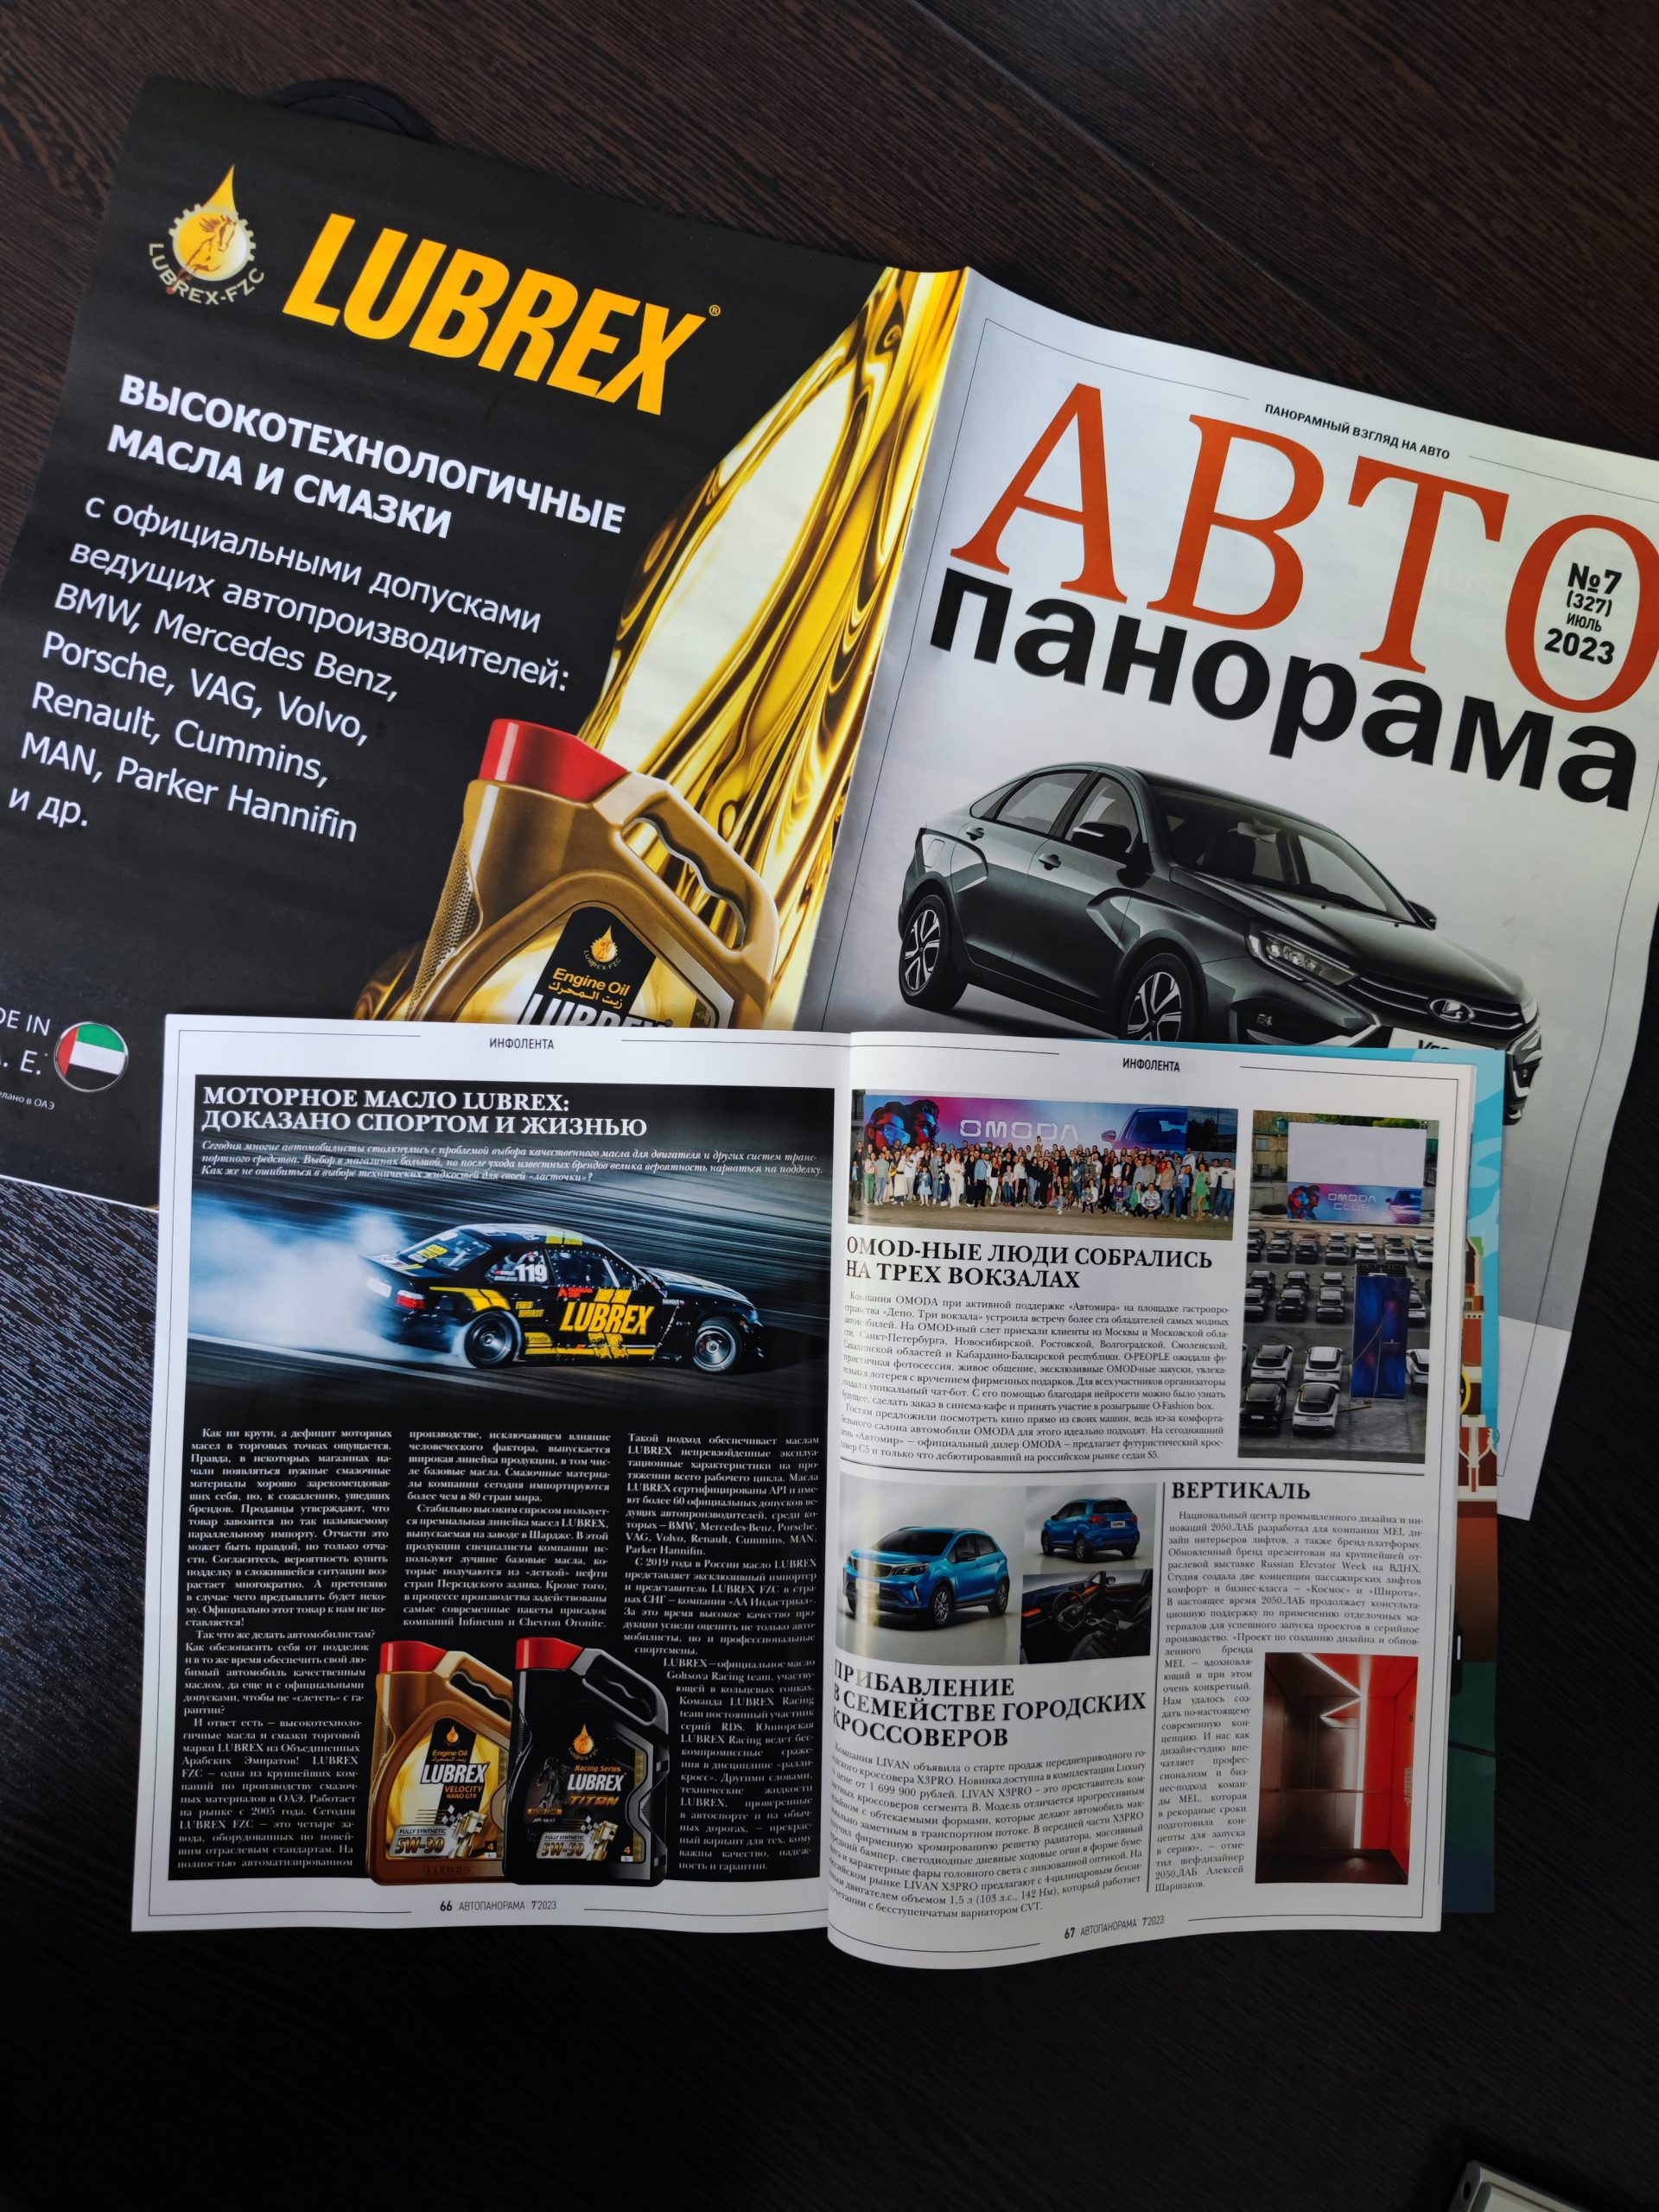 Статья про масло LUBREX в журнале Автопанорама